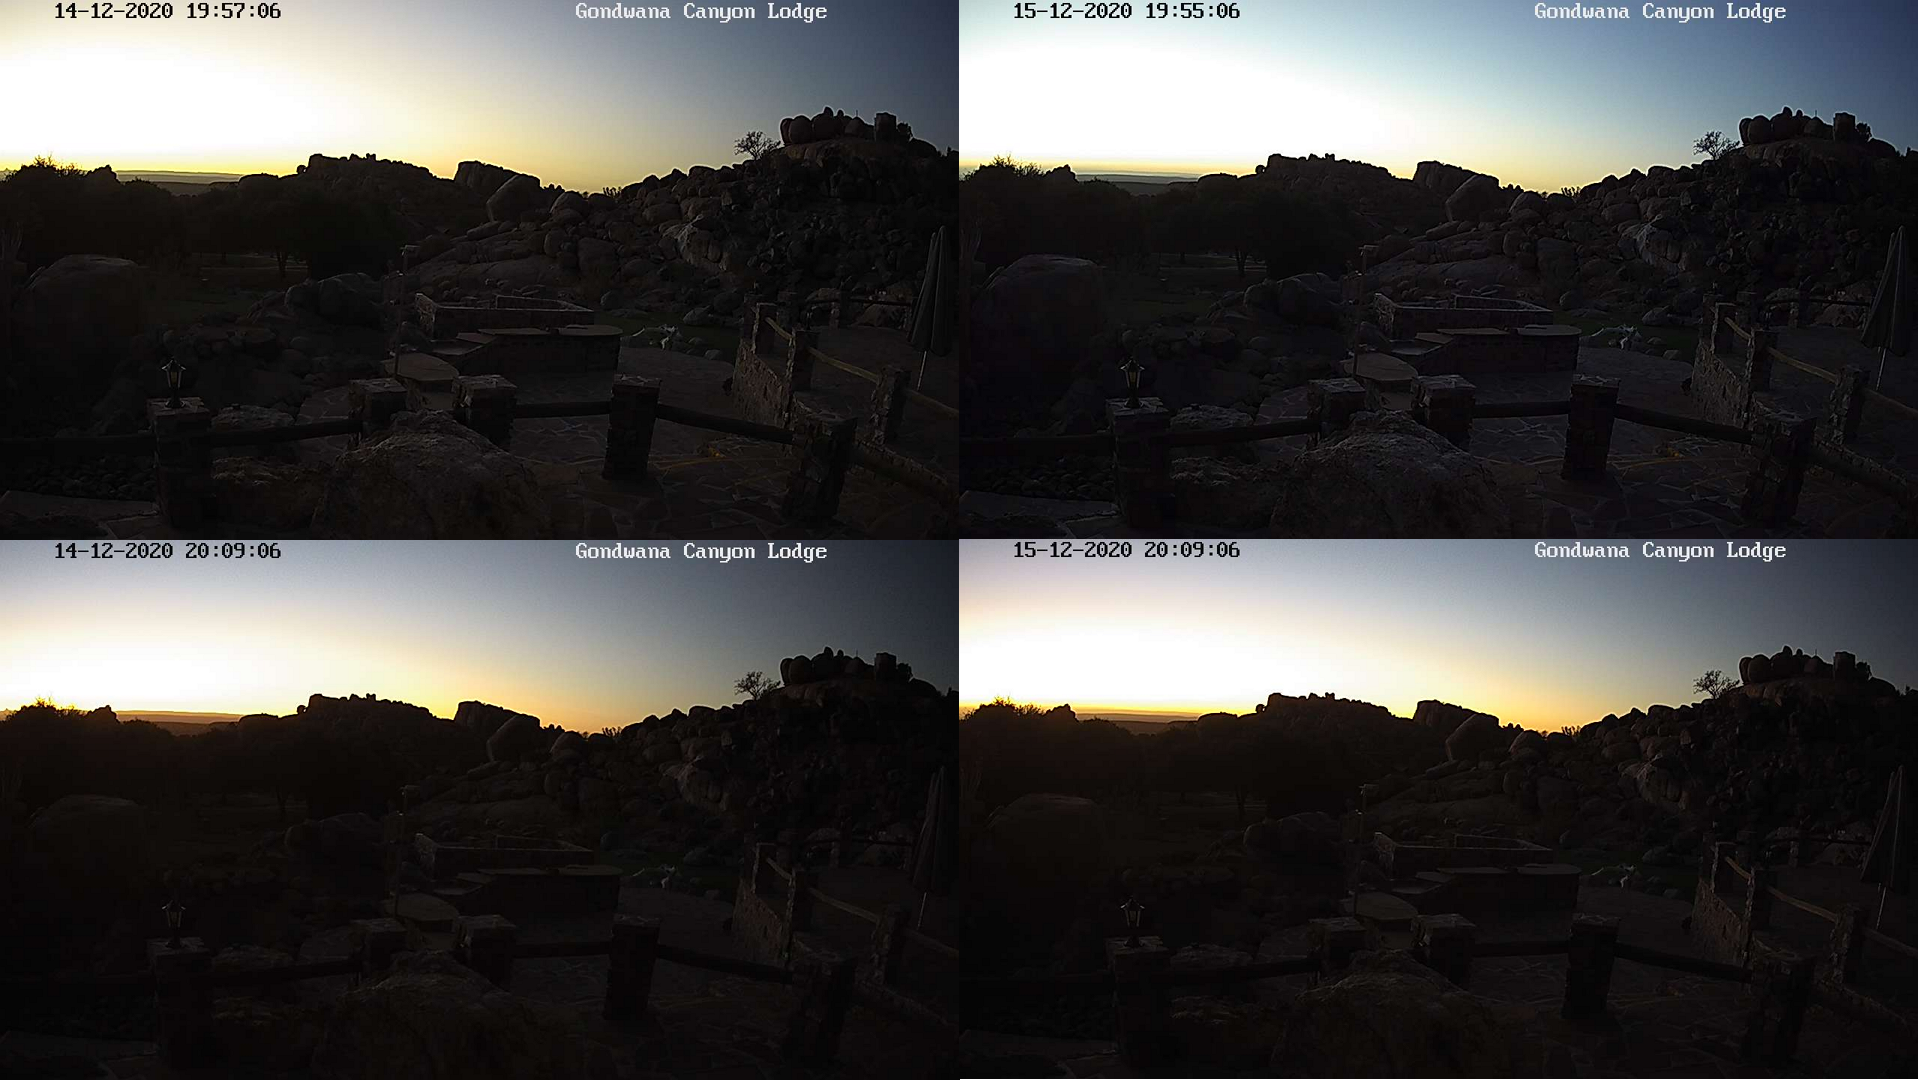 Gondwana Canyon Lodge, solar eclipse below the horizon Dec, 2020 2